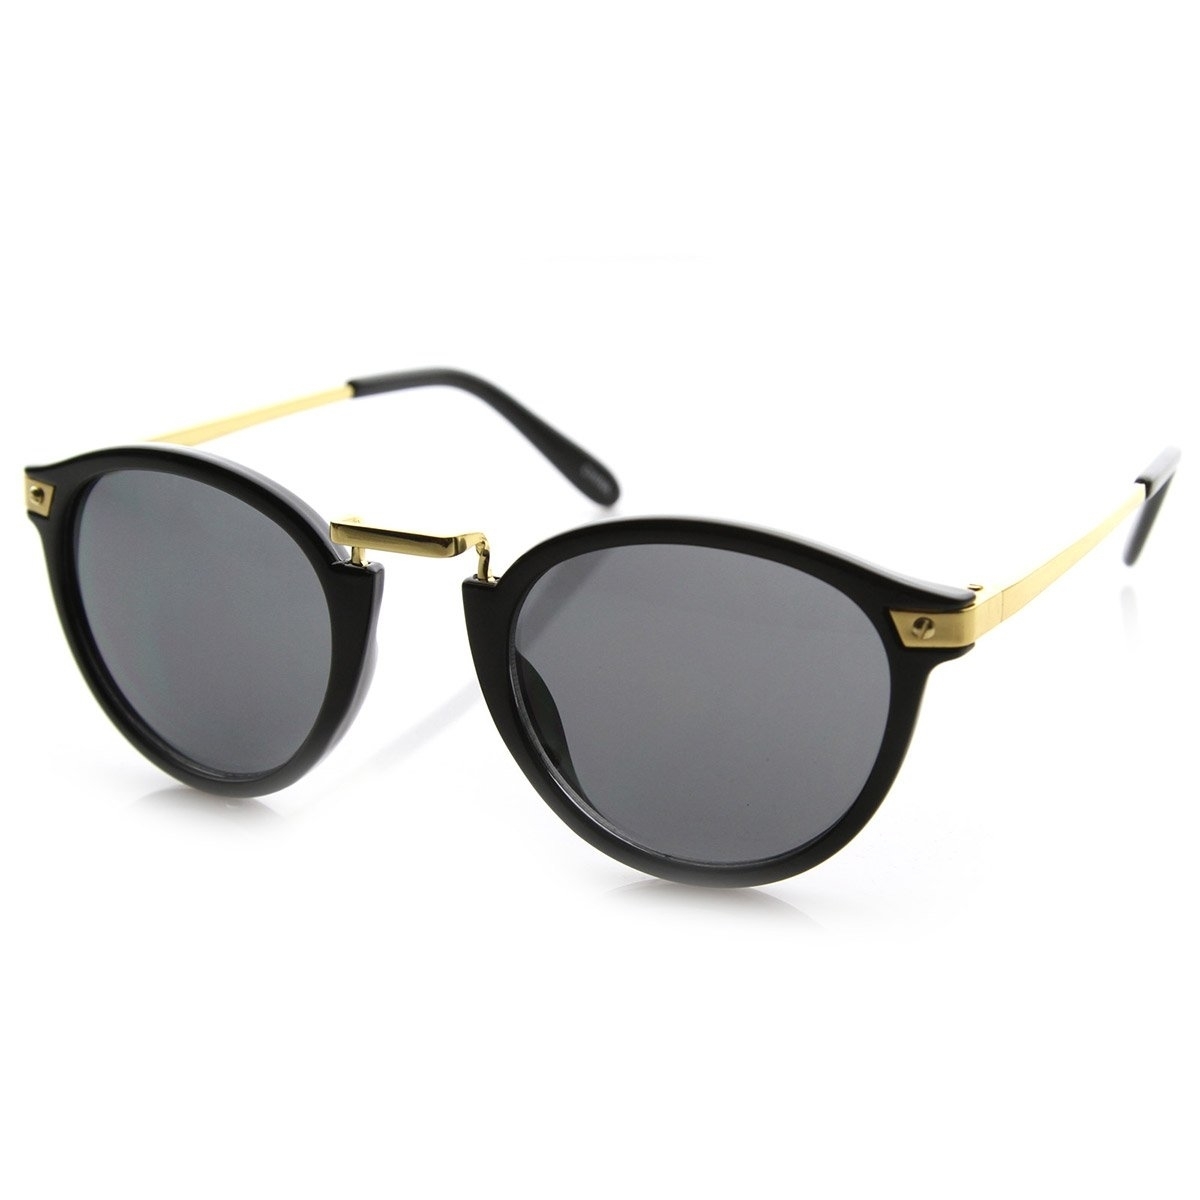 Vintage Inspired Round Horned Rim P-3 Frame Retro Sunglasses - Yellow Tortoise Sun